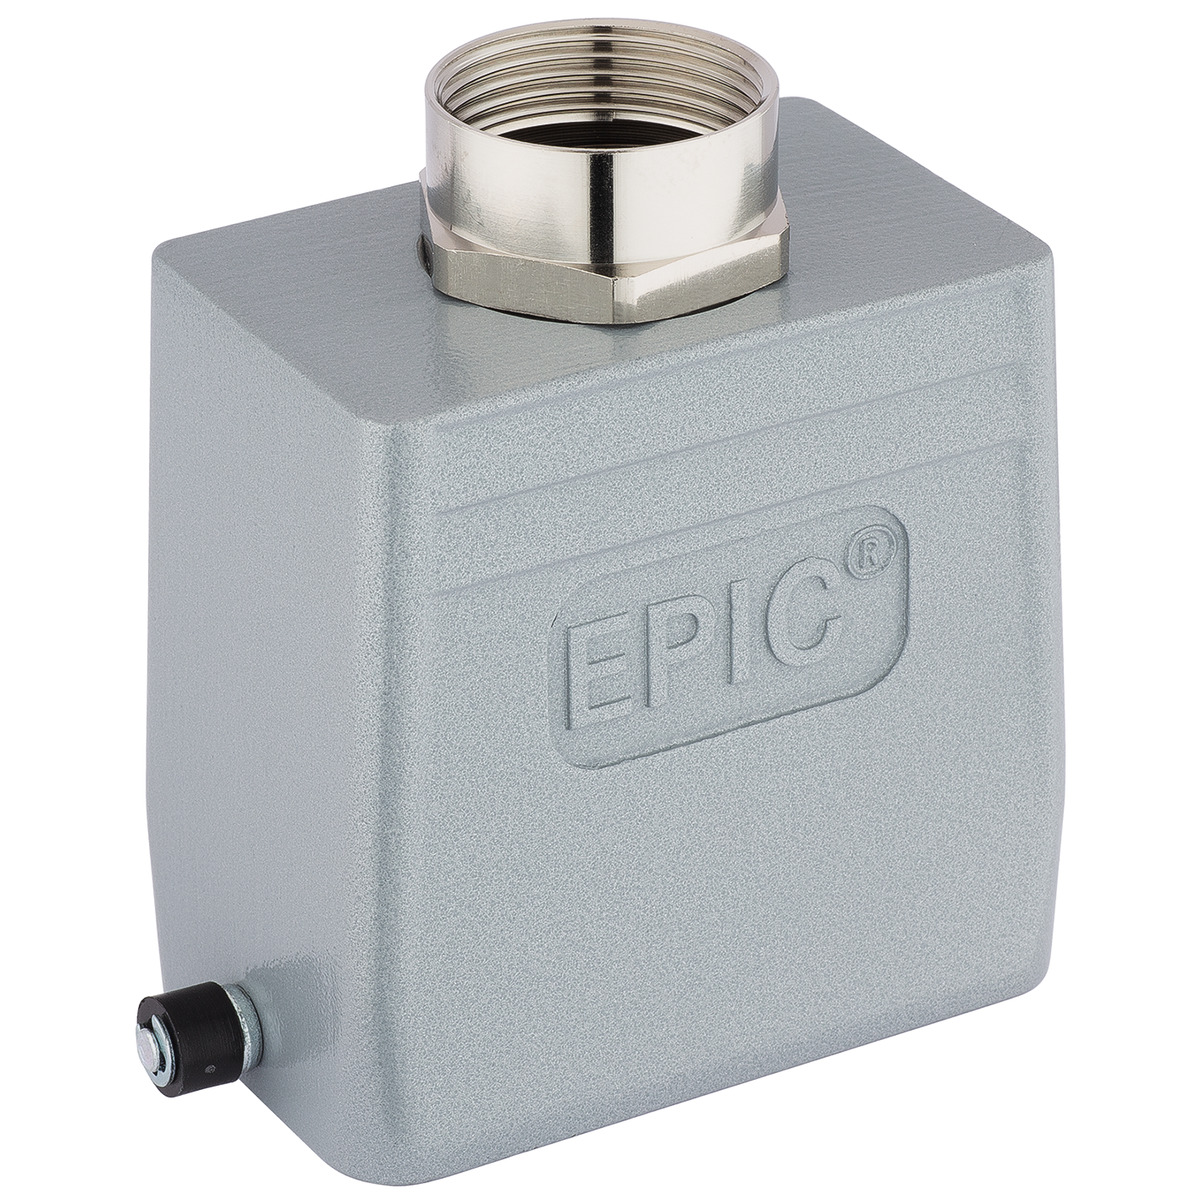 EPIC® H-B 10 TGH-RO Tüllengehäuse